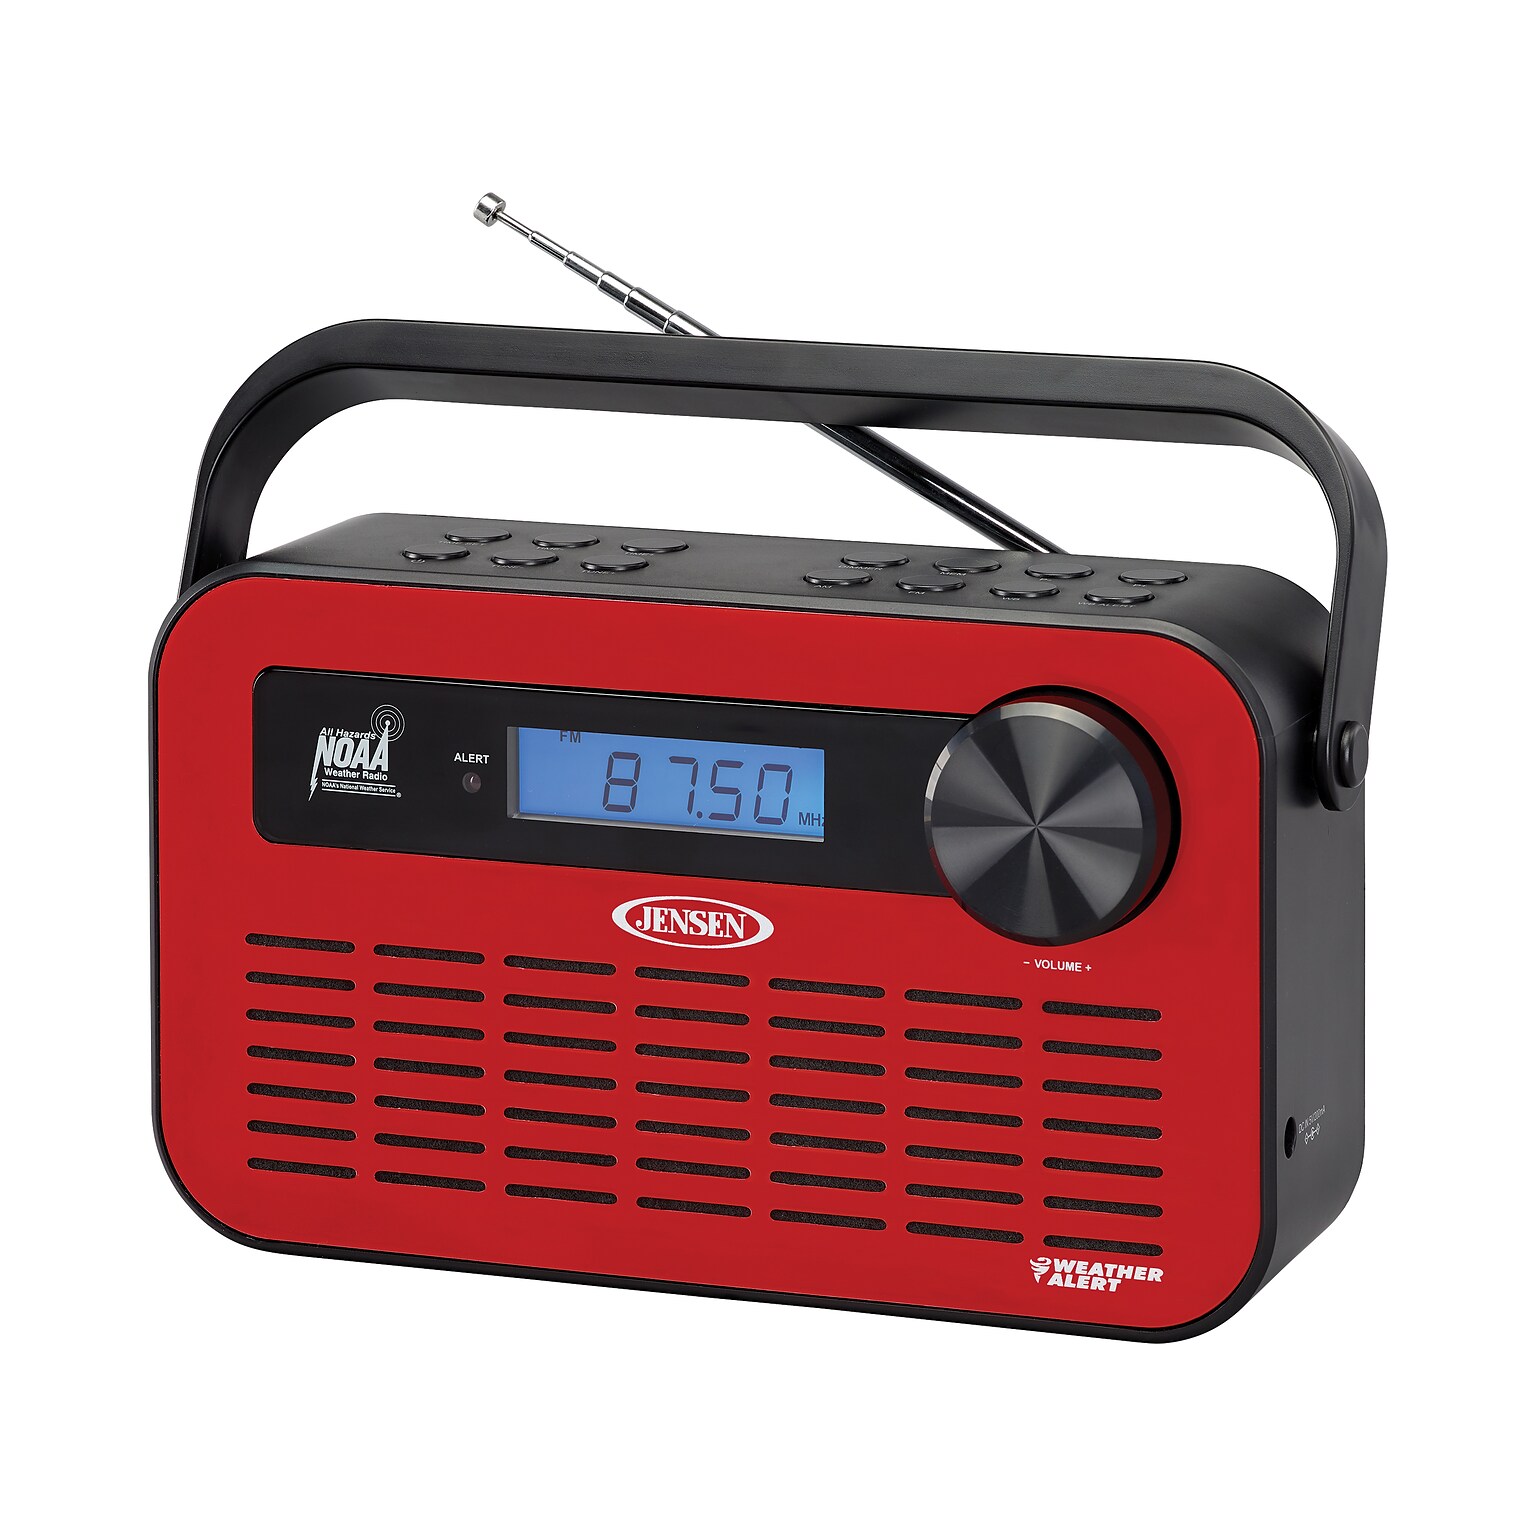 Jensen JEP-250 AM/FM Weather Alert Radio, Red/Black (JEP-250)